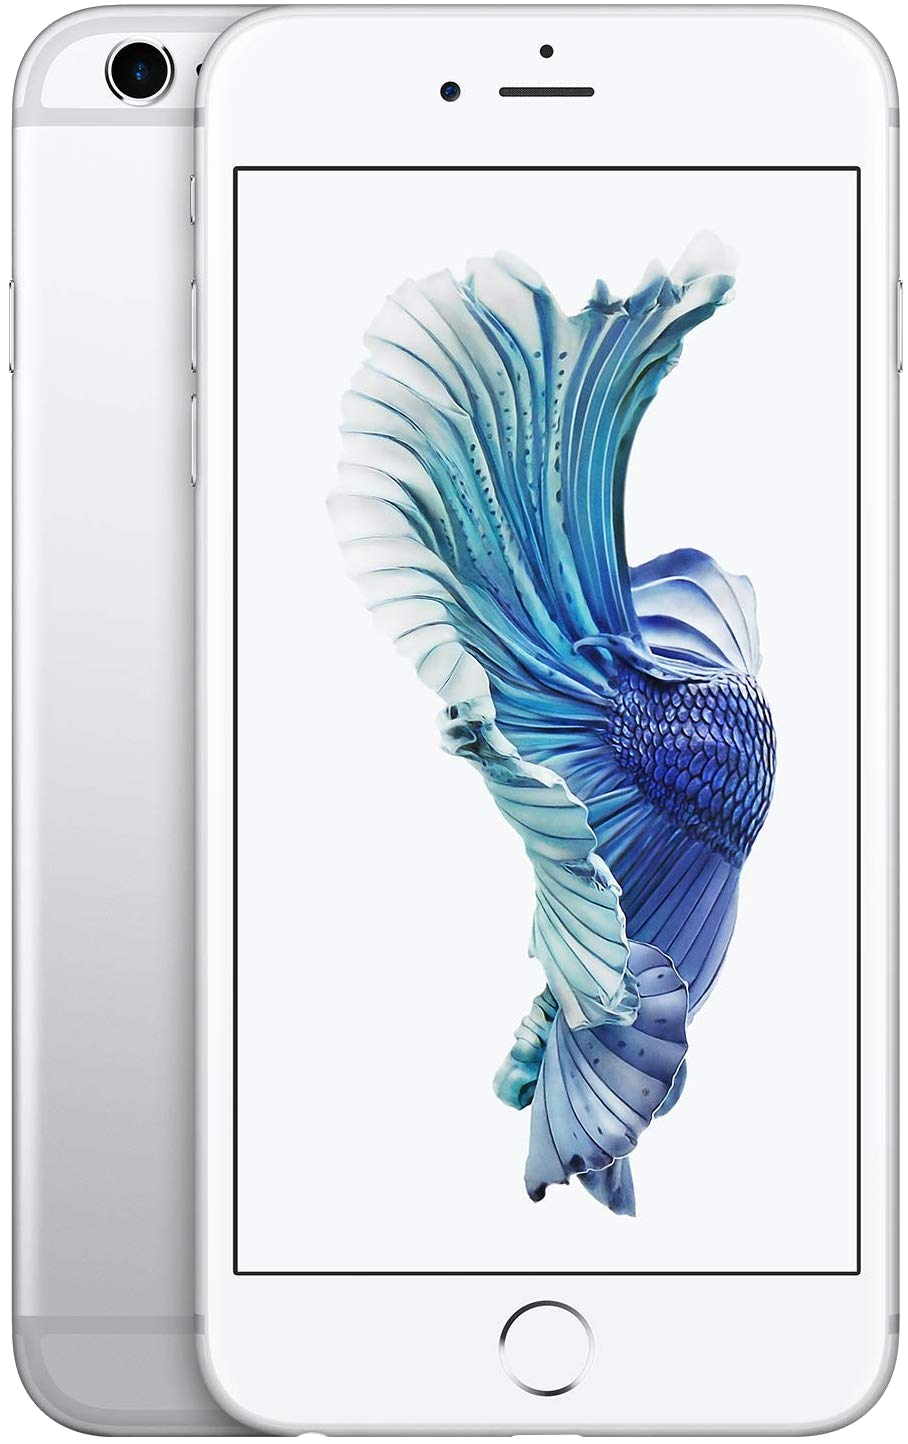 Apple iPhone 6s Plus Silver - Ohne Vertrag